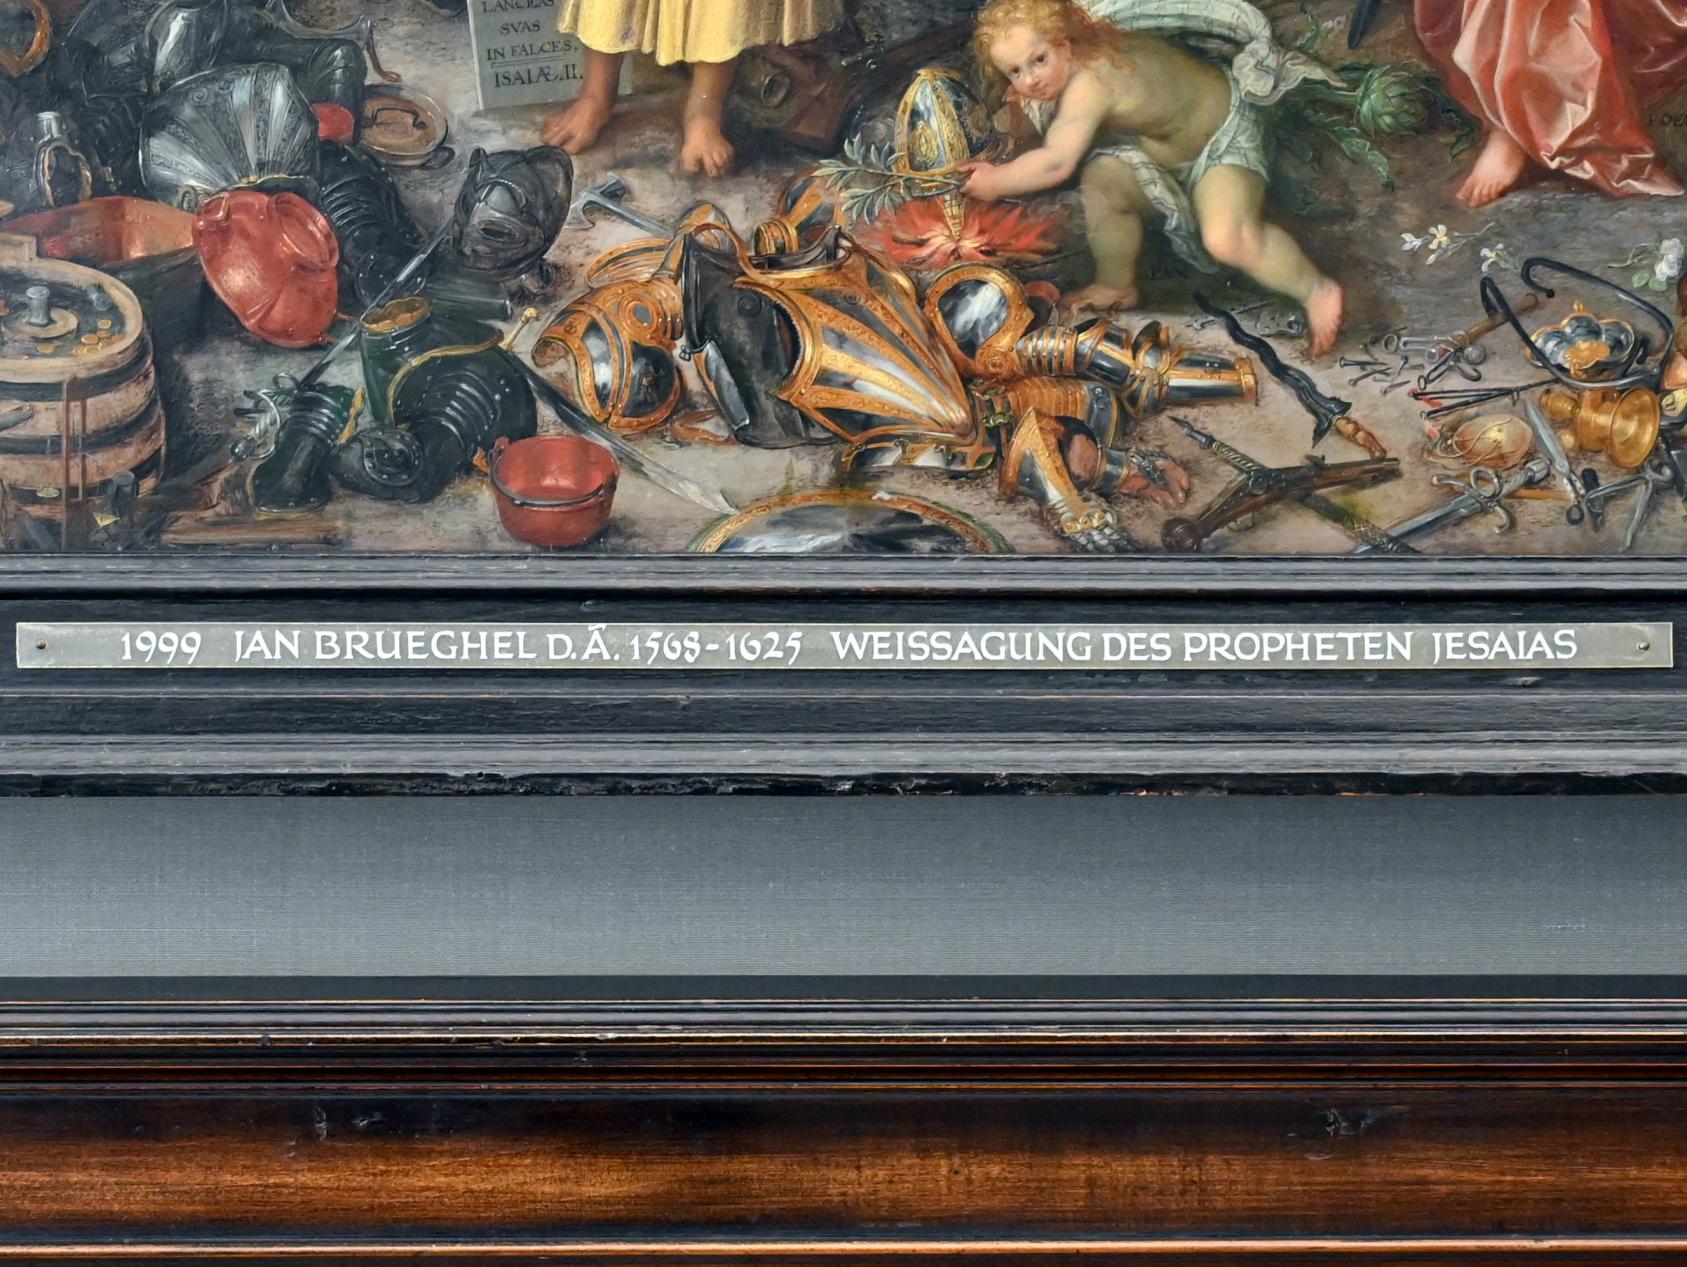 Jan Brueghel der Ältere (Samtbrueghel, Blumenbrueghel) (1593–1621), Die Weissagung des Propheten Jesaias, München, Alte Pinakothek, Obergeschoss Kabinett 8, um 1609, Bild 2/2